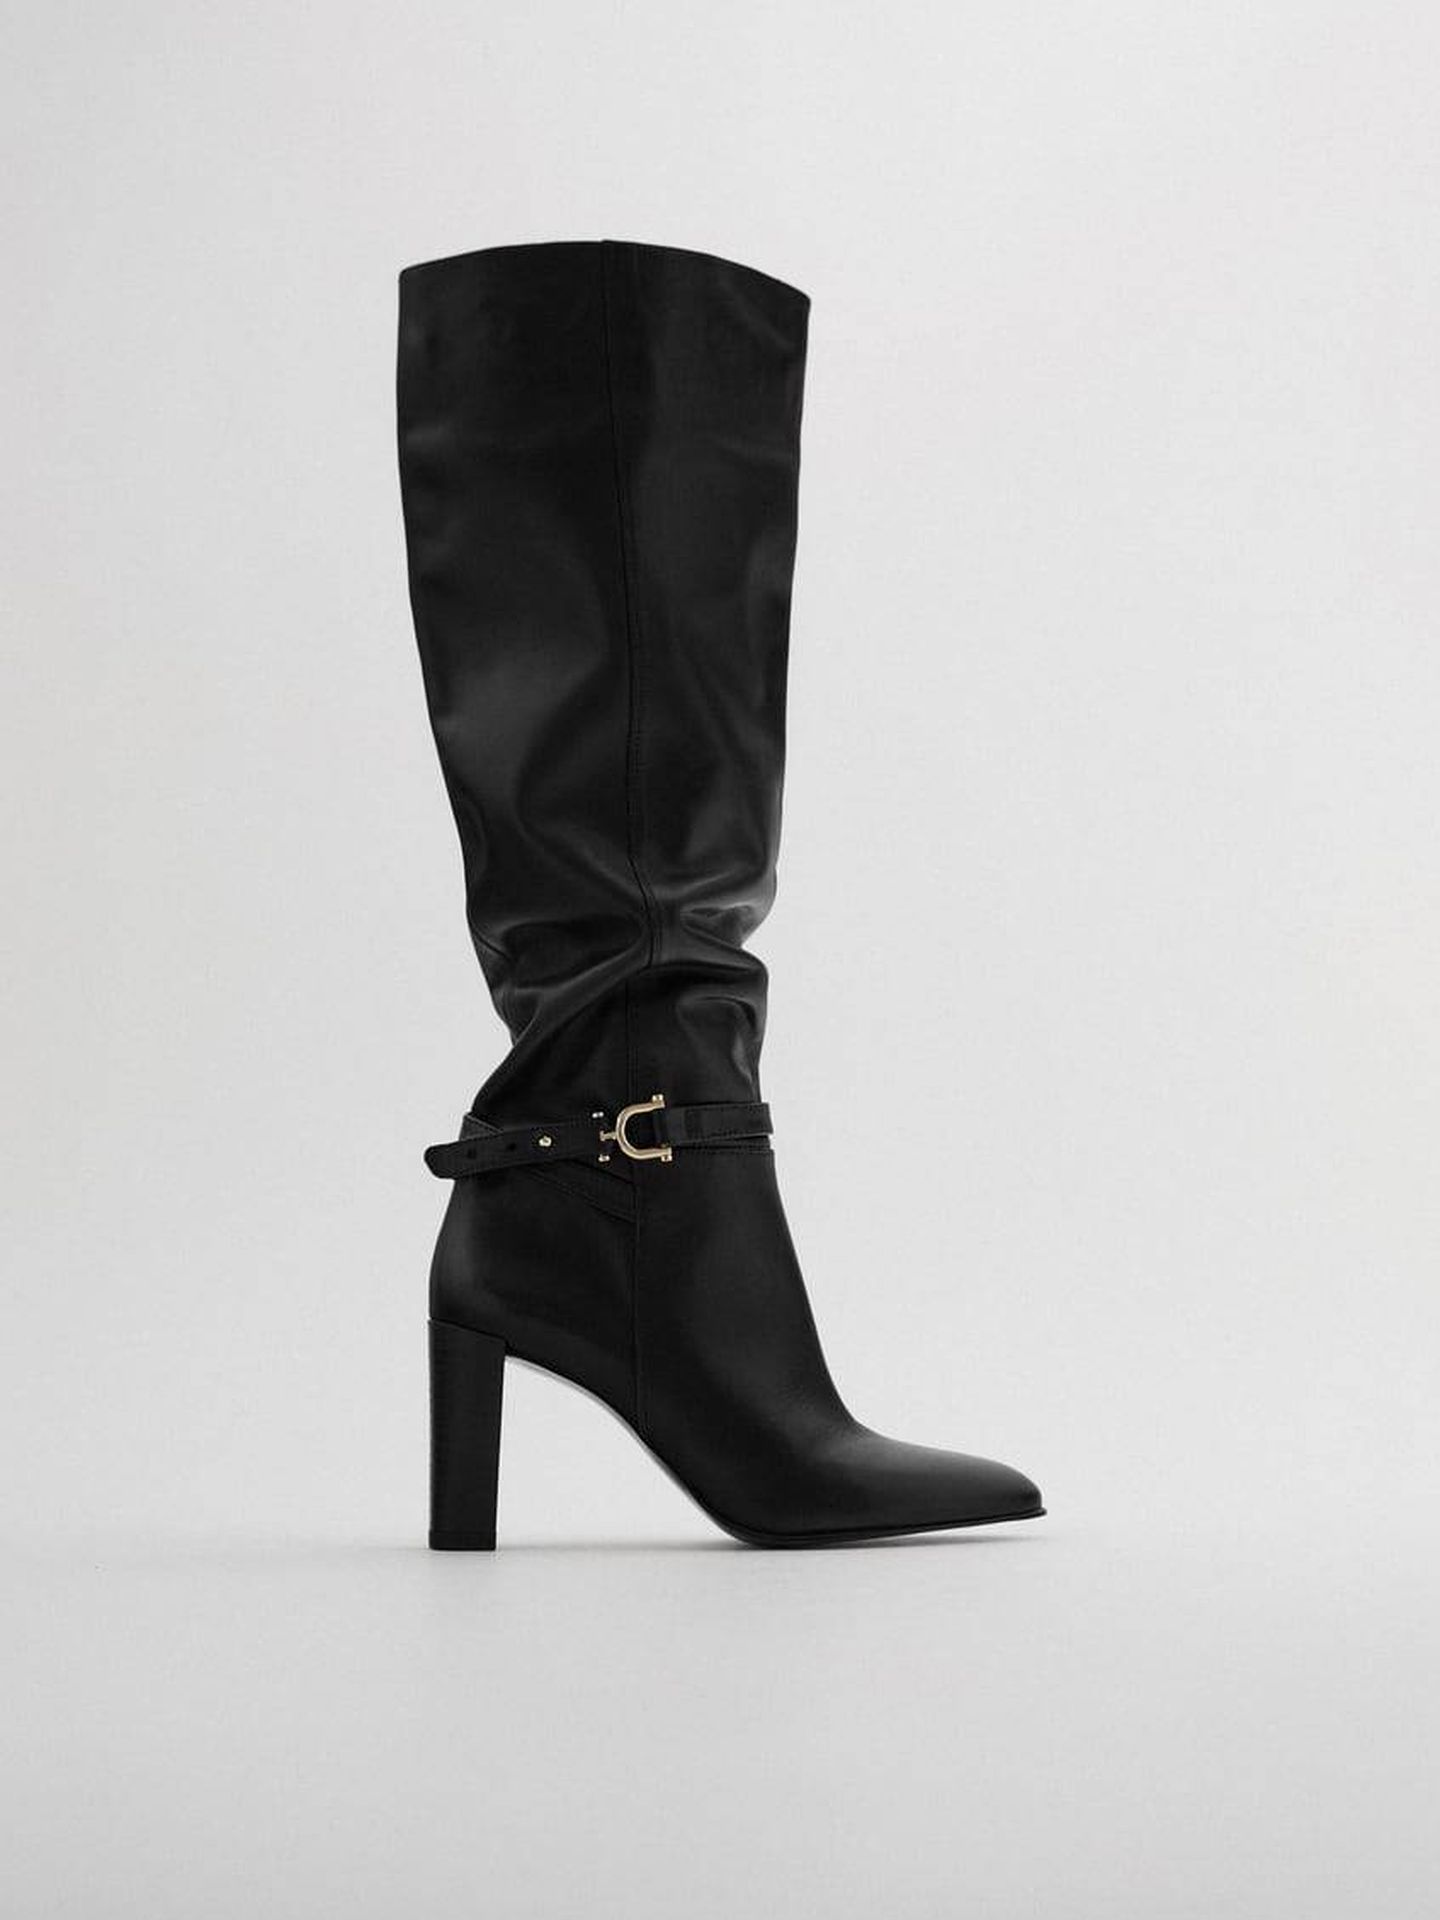 Botas altas negras de Zara. (Cortesía)